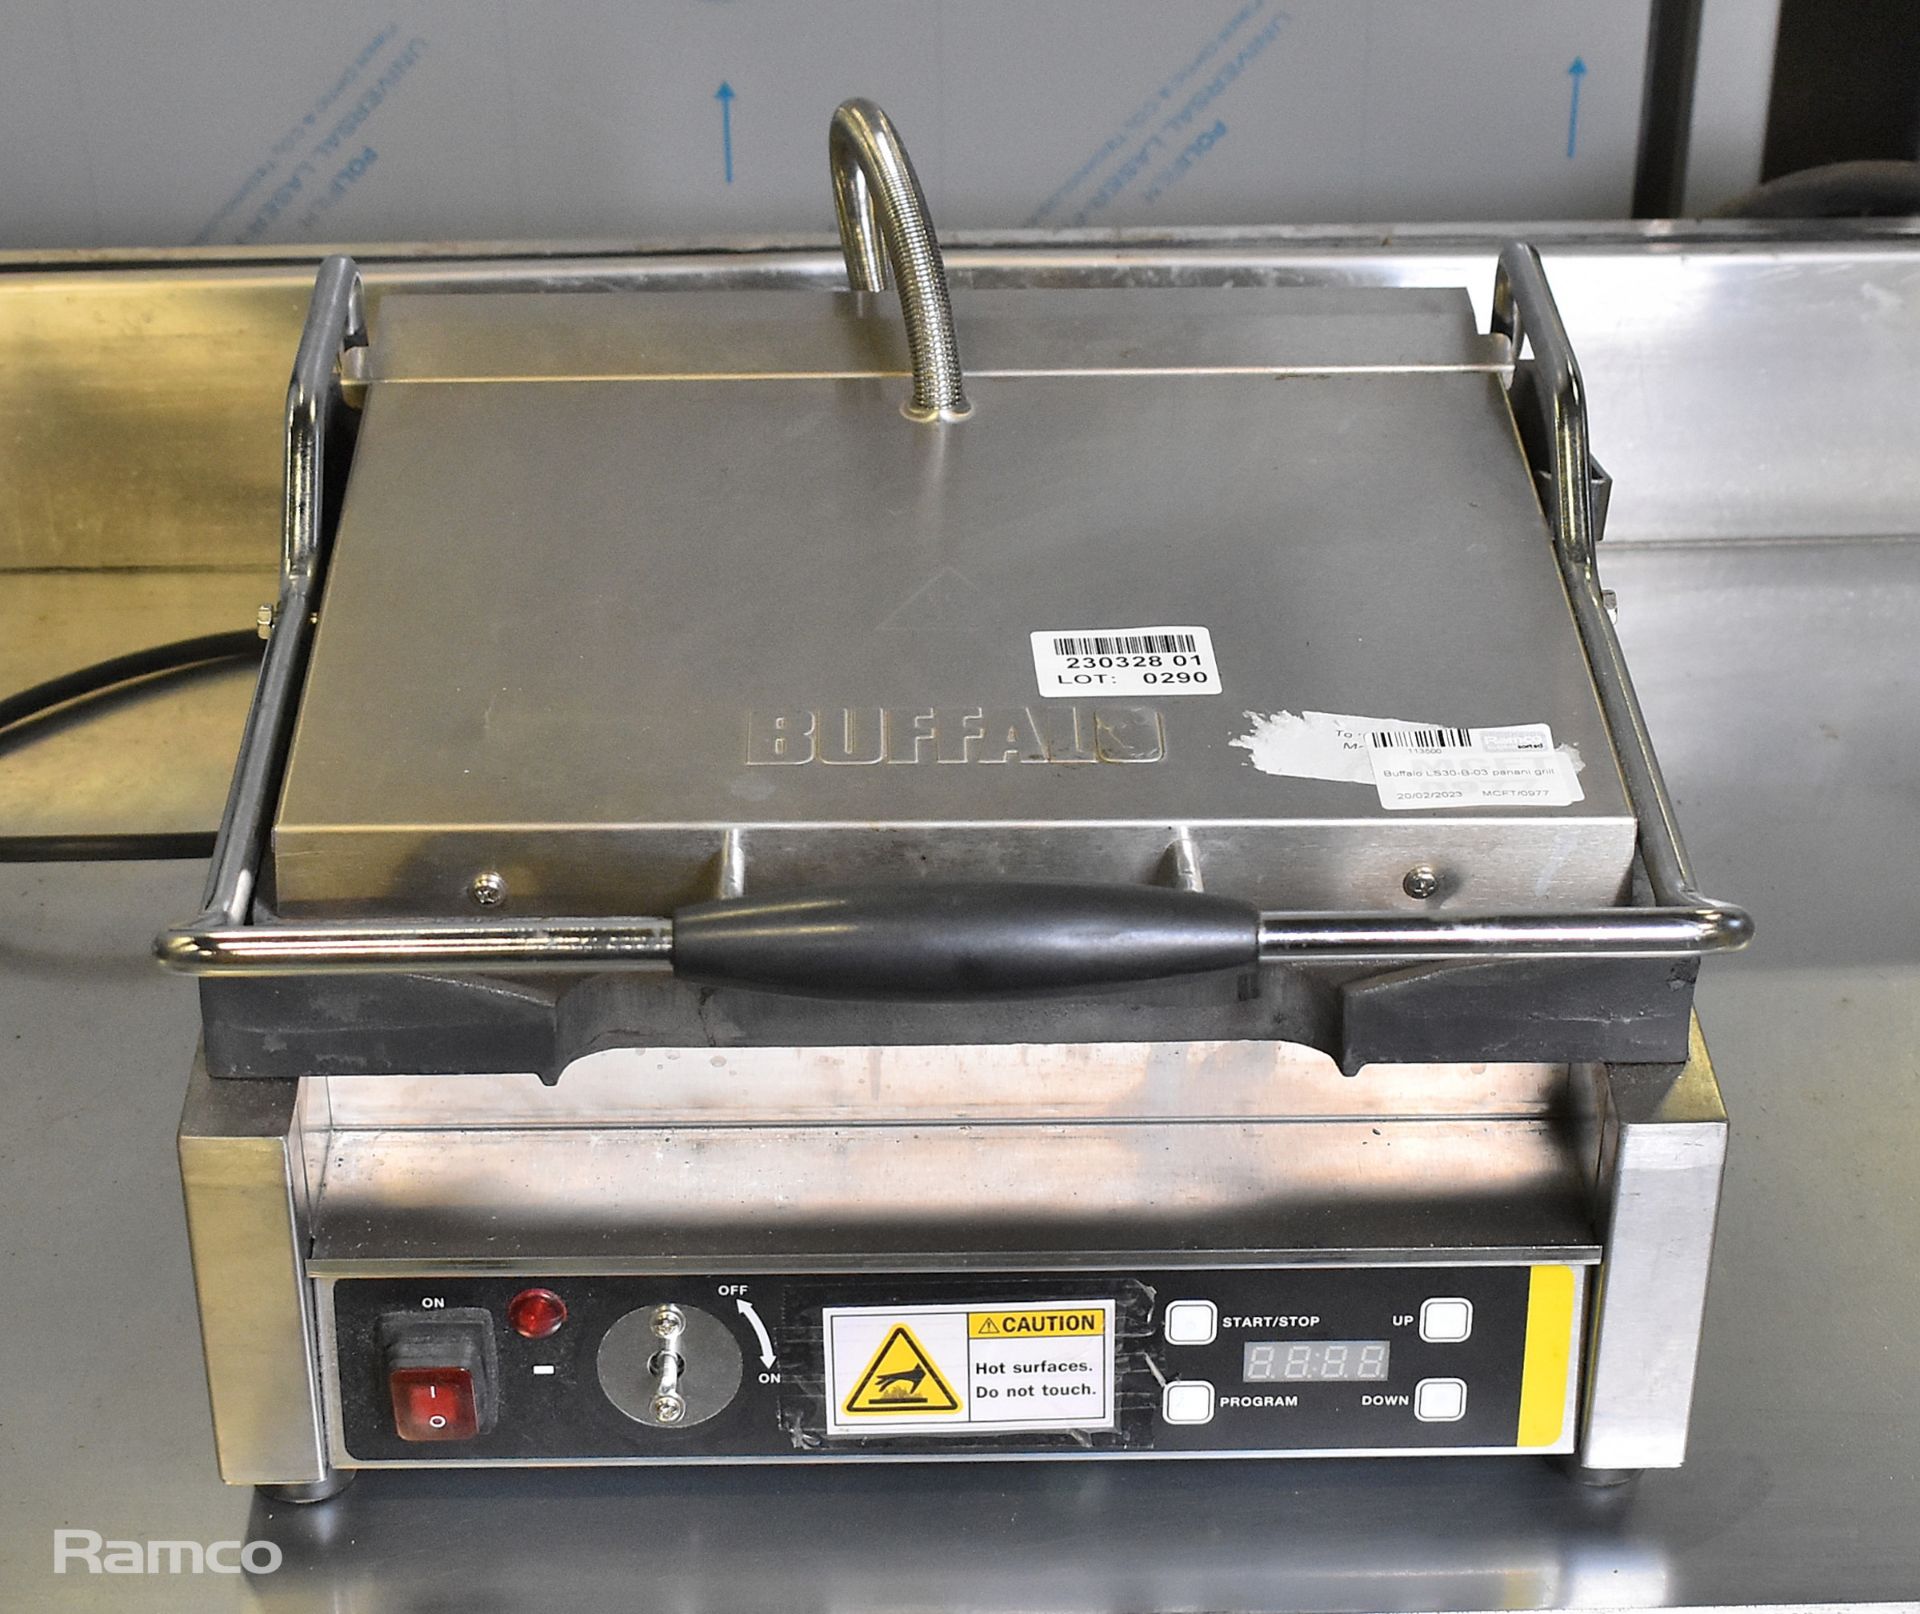 Buffalo L530-B-03 panini grill